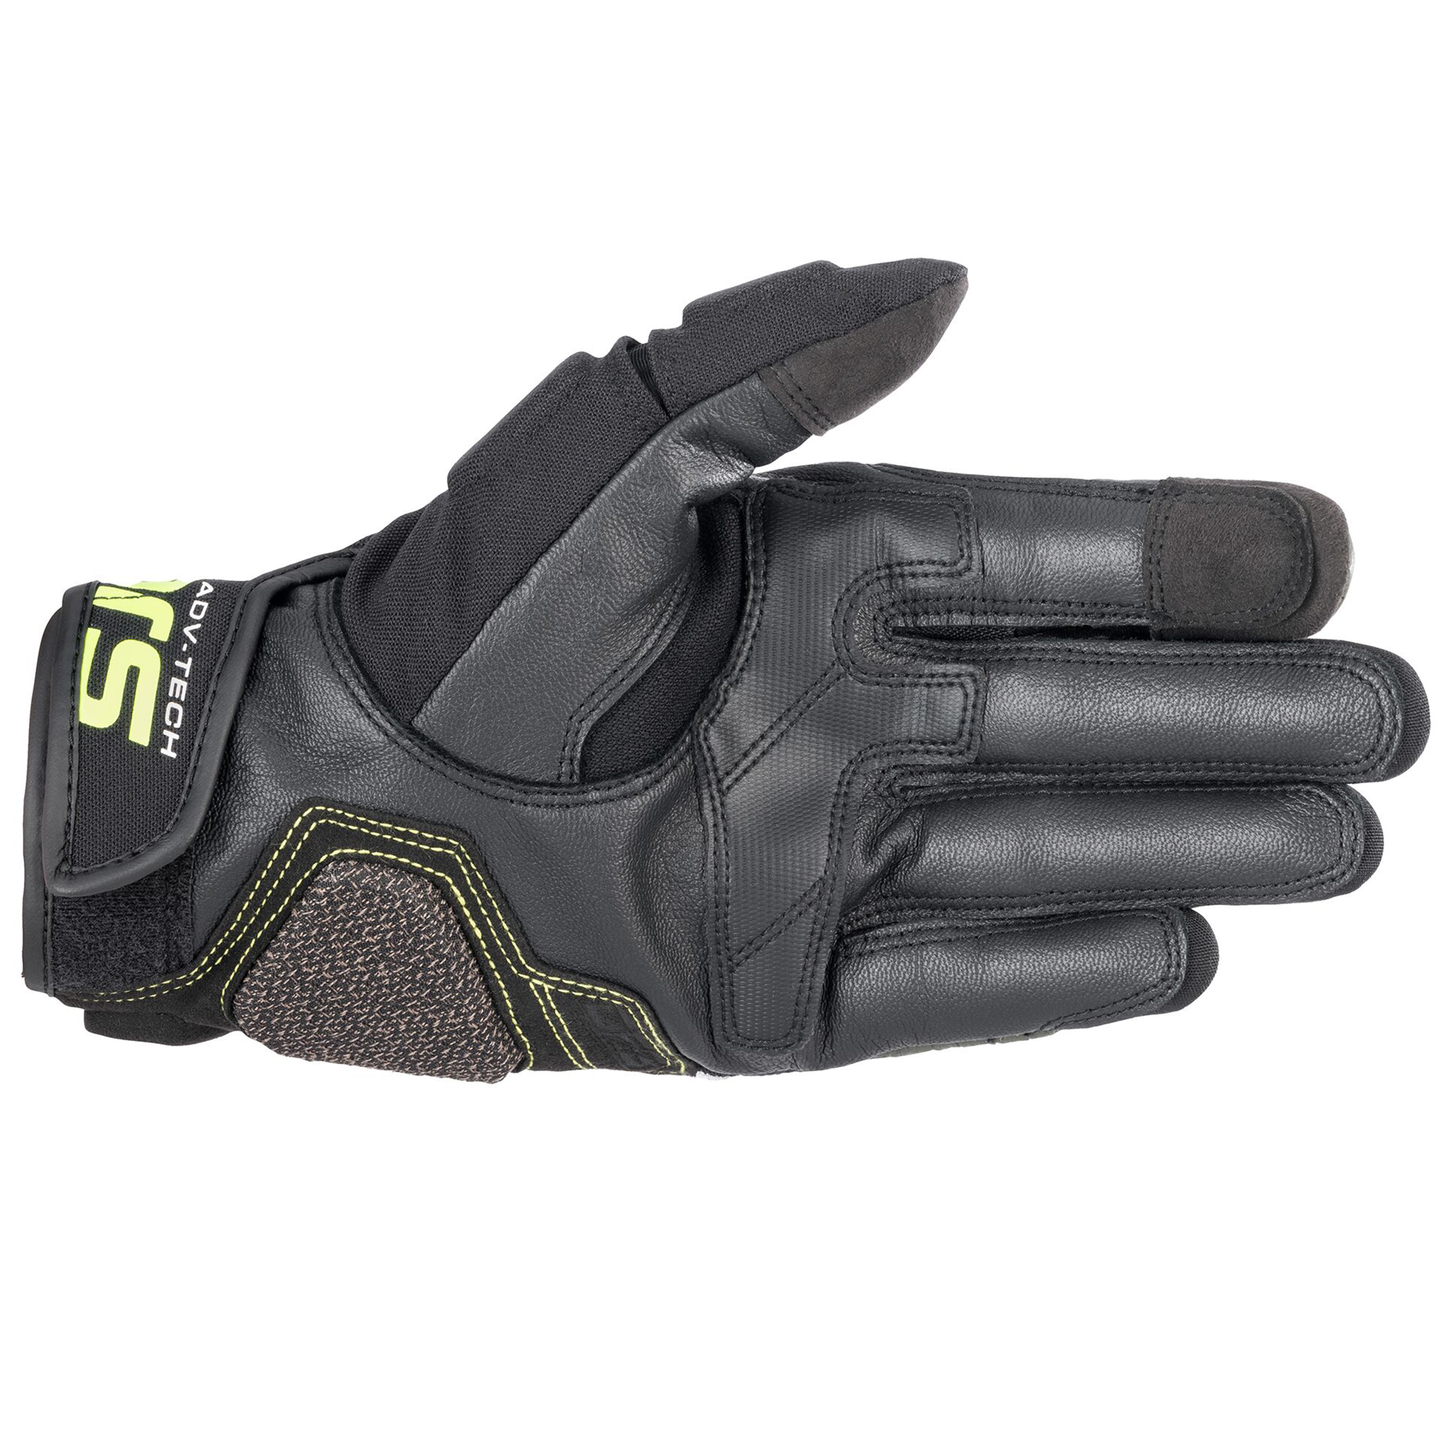 Alpinestars Halo Leather Gloves - Forest/Black/Flo Yellow